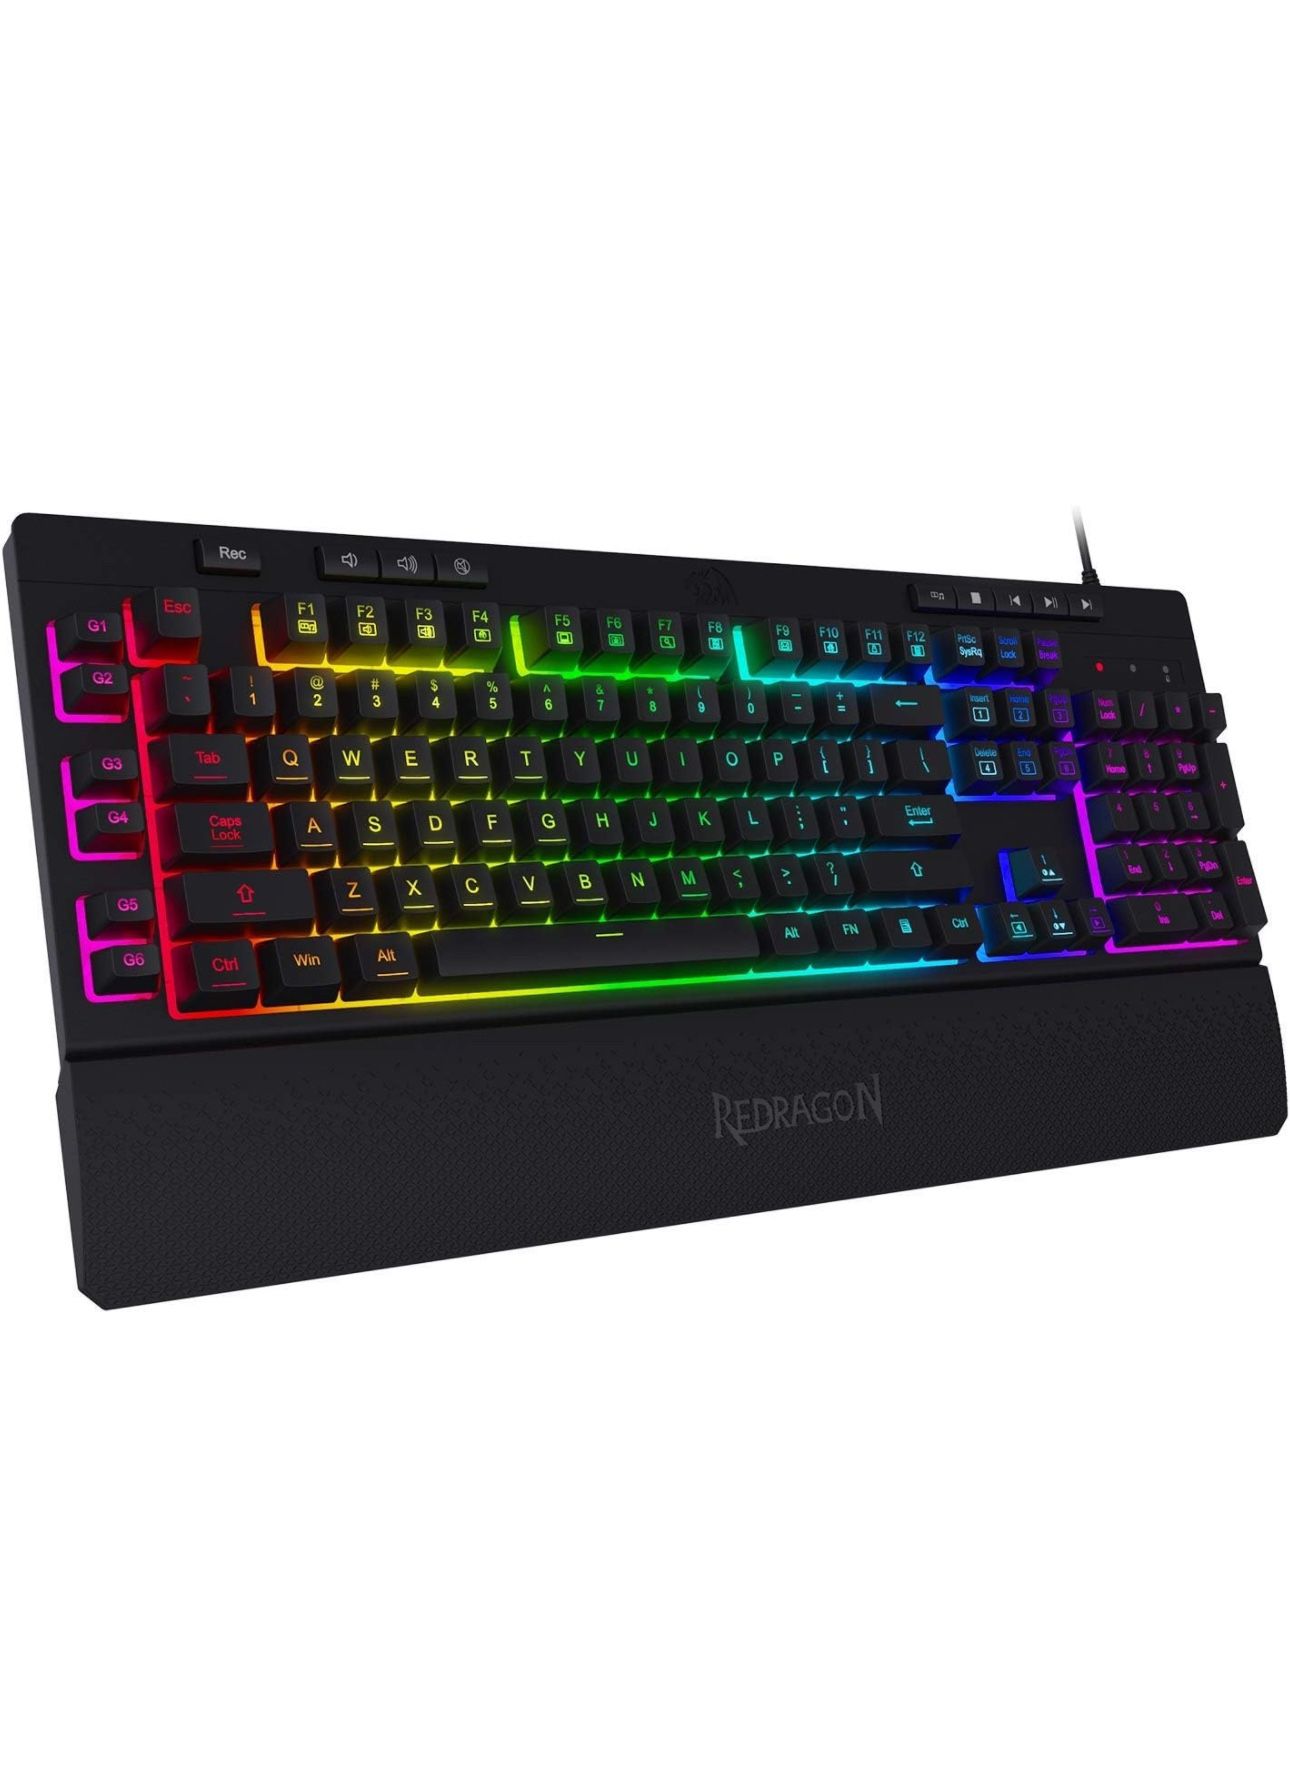 Redragon K512 Shiva RGB Backlit Membrane Gaming Keyboard with Multimedia Keys, Linear Mechanical-Feel Switch, 6 Extra On-Board Macro Keys, Dedicated M